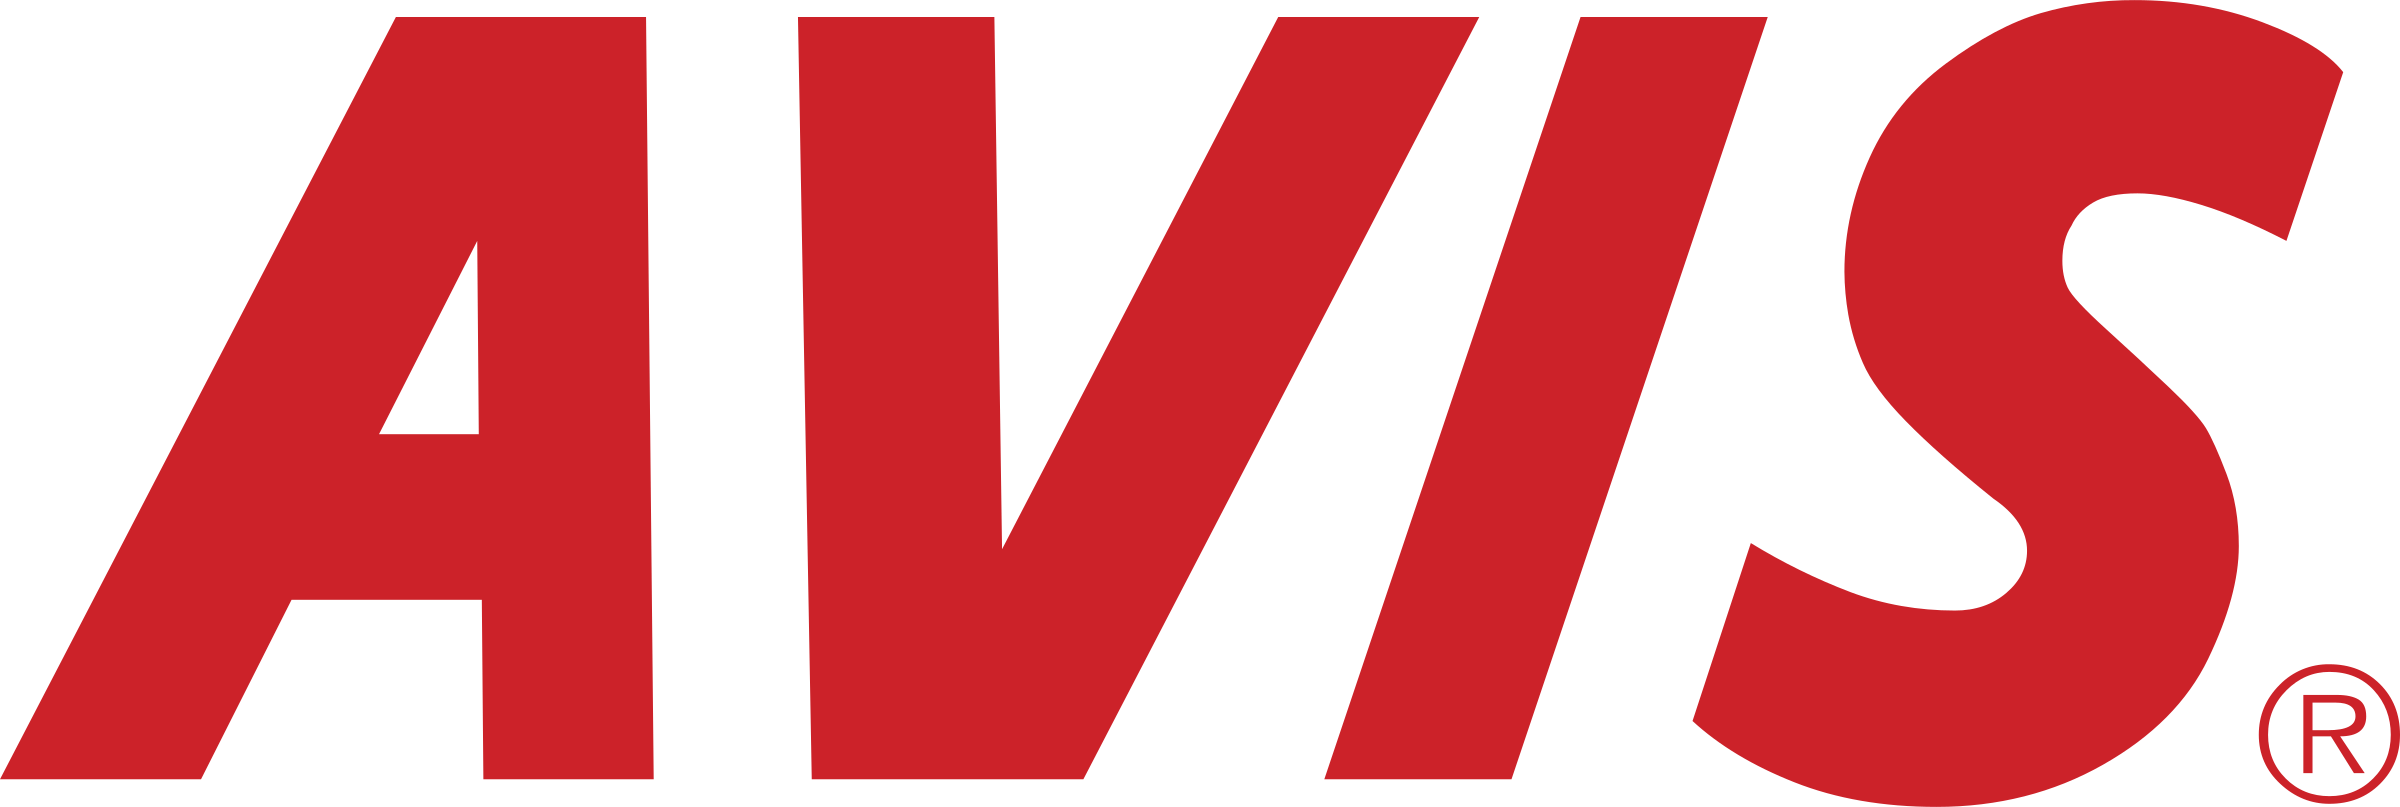 Avis Logo - Avis Logo PNG Transparent & SVG Vector - Freebie Supply